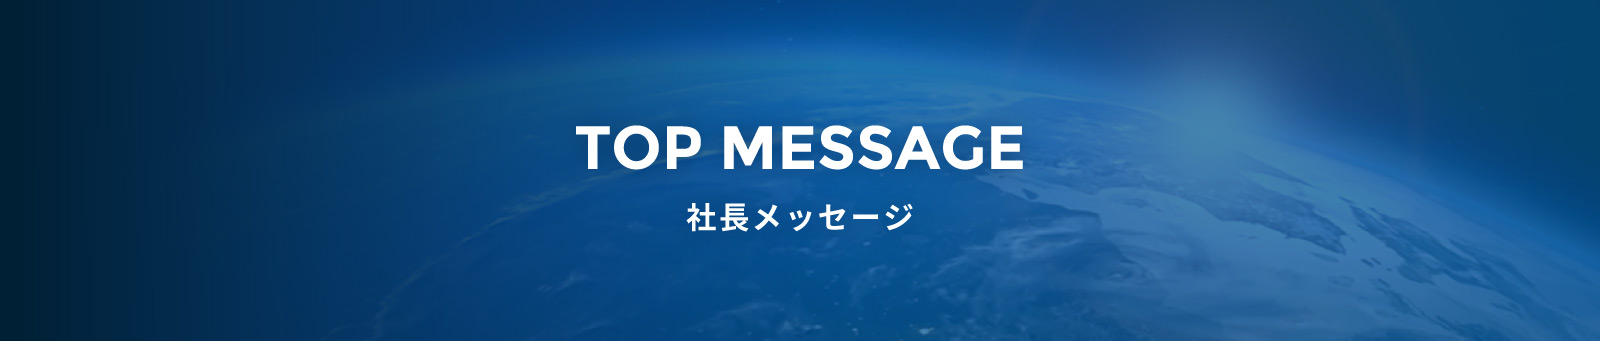 TOP MESSAGE 社長メッセージ